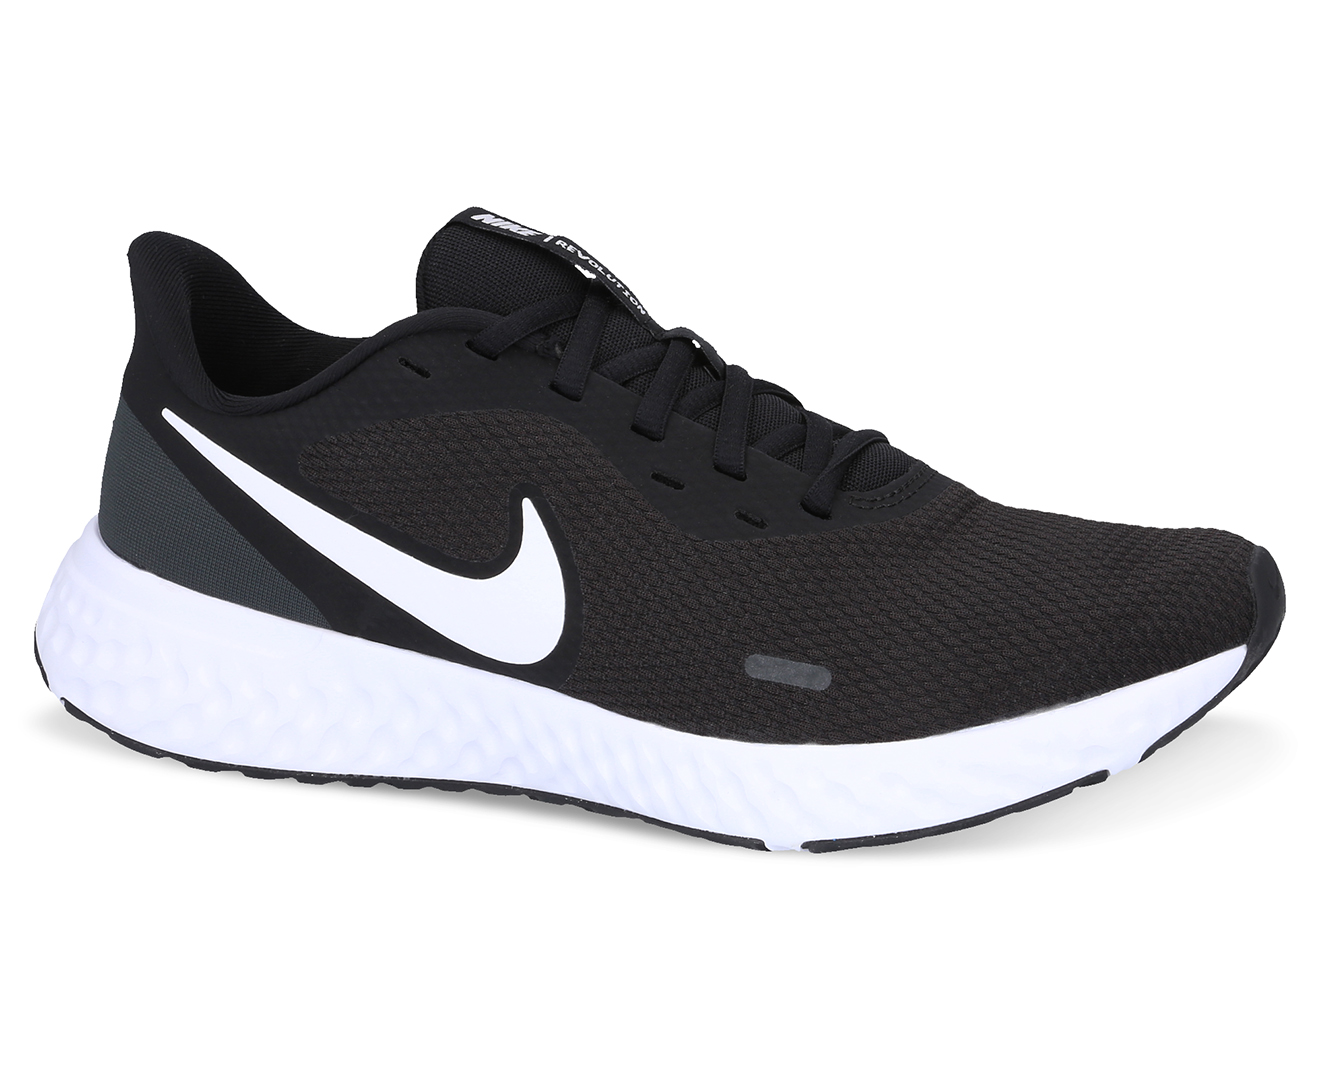 Nike Men's Revolution 5 Running Shoes - Black/White/Anthracite | Catch ...